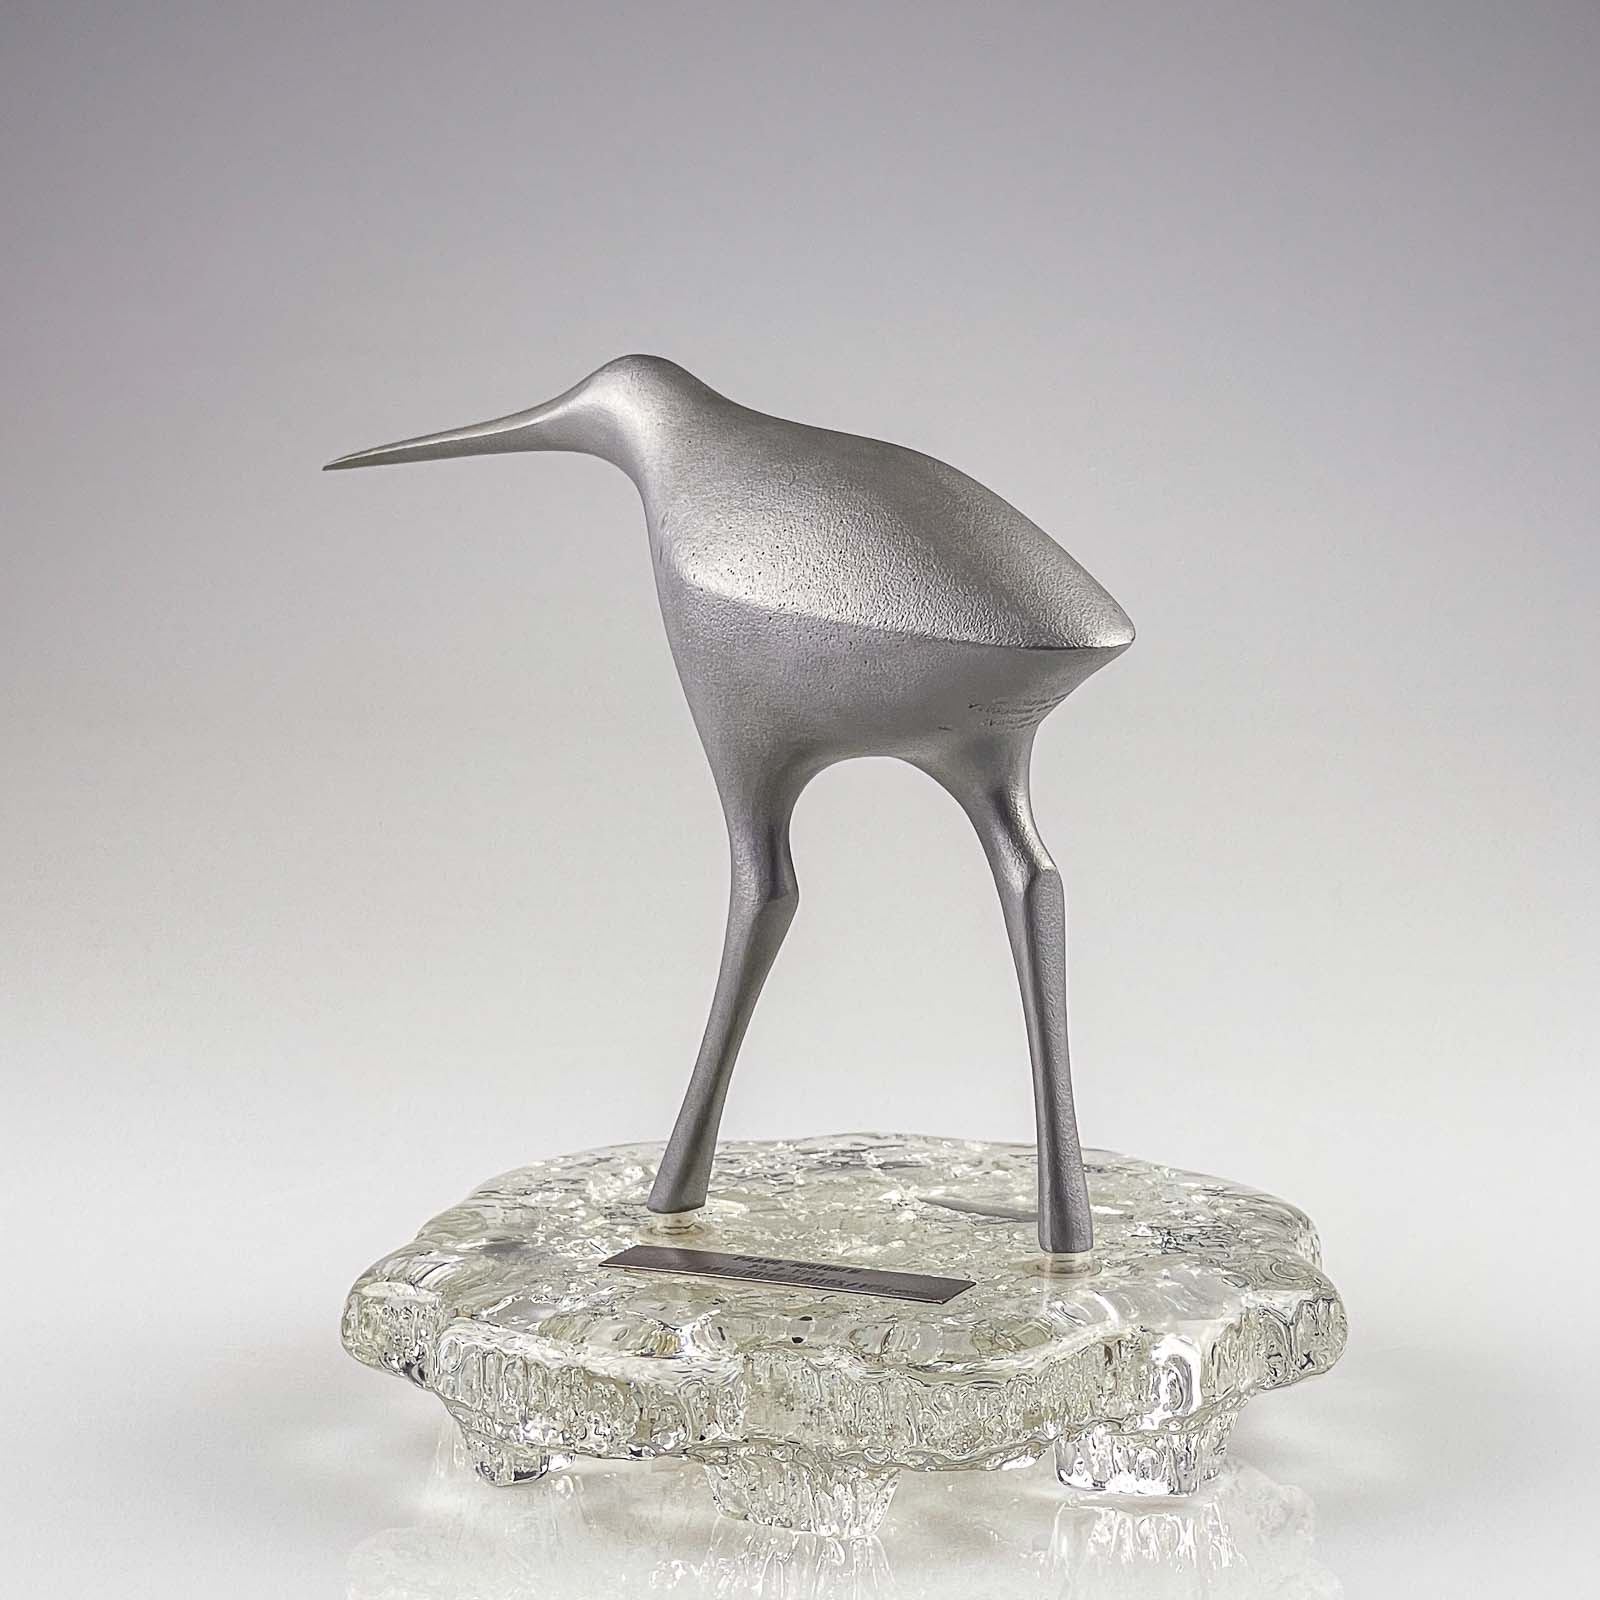 Tapio Wirkkala - "Suokurppa", a sculpture of a bird on a glass stand, model TW 513 - Handmade to order by Kultakeskus Oy, Finland 1984